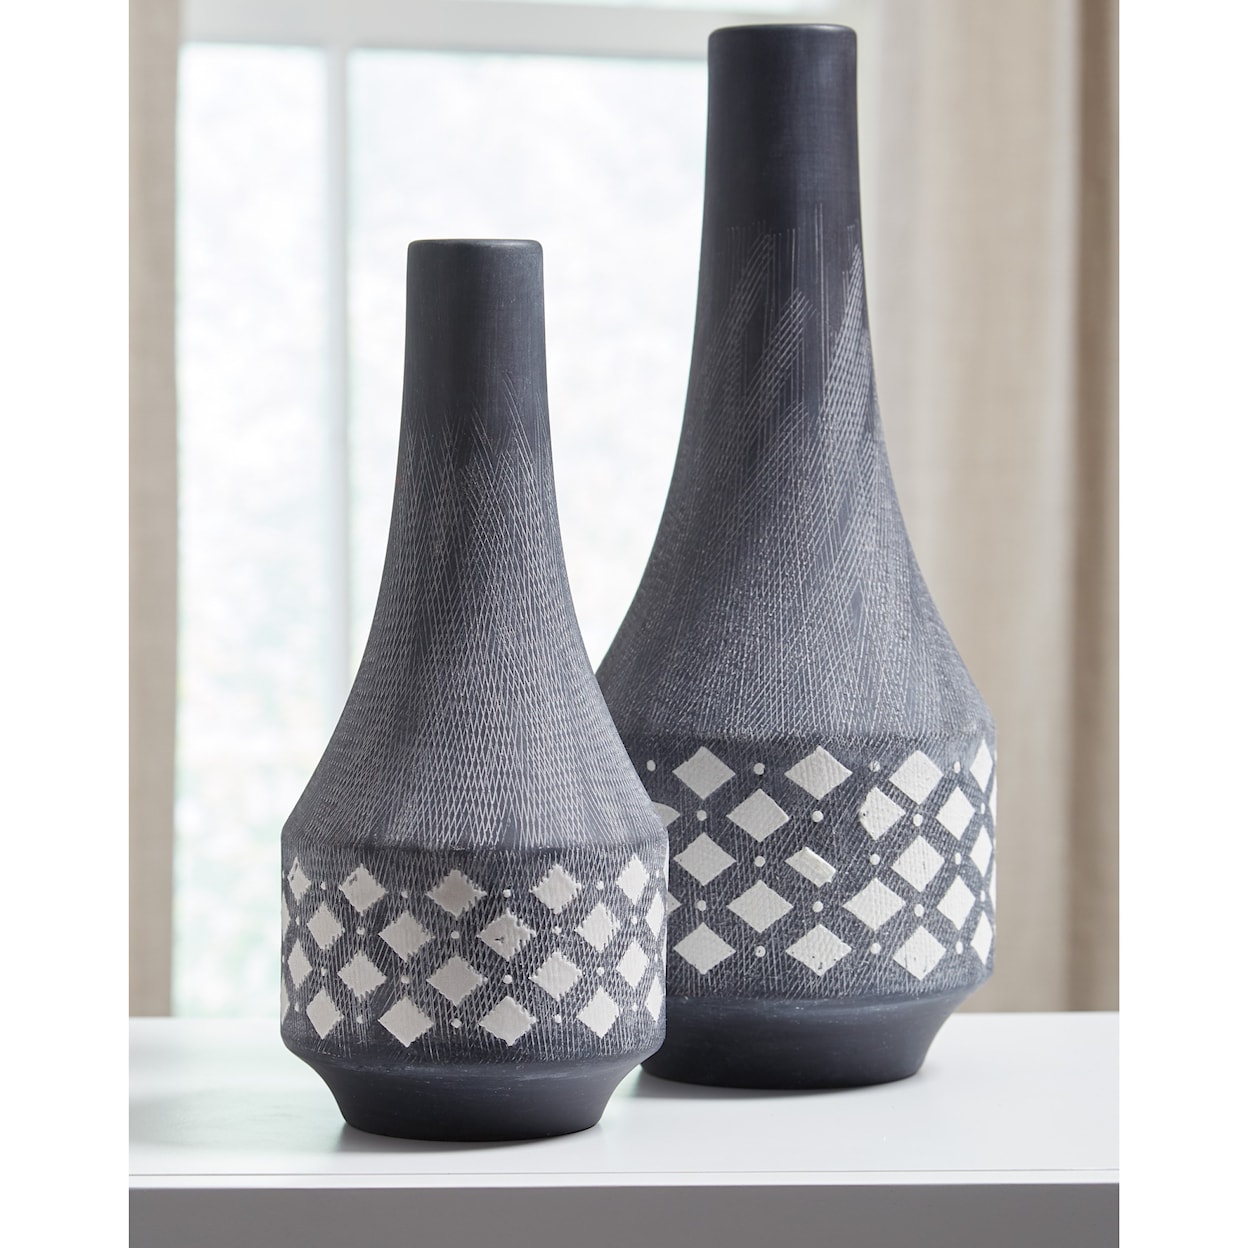 Signature Design by Ashley Accents Dornitilla Black/White Vase Set